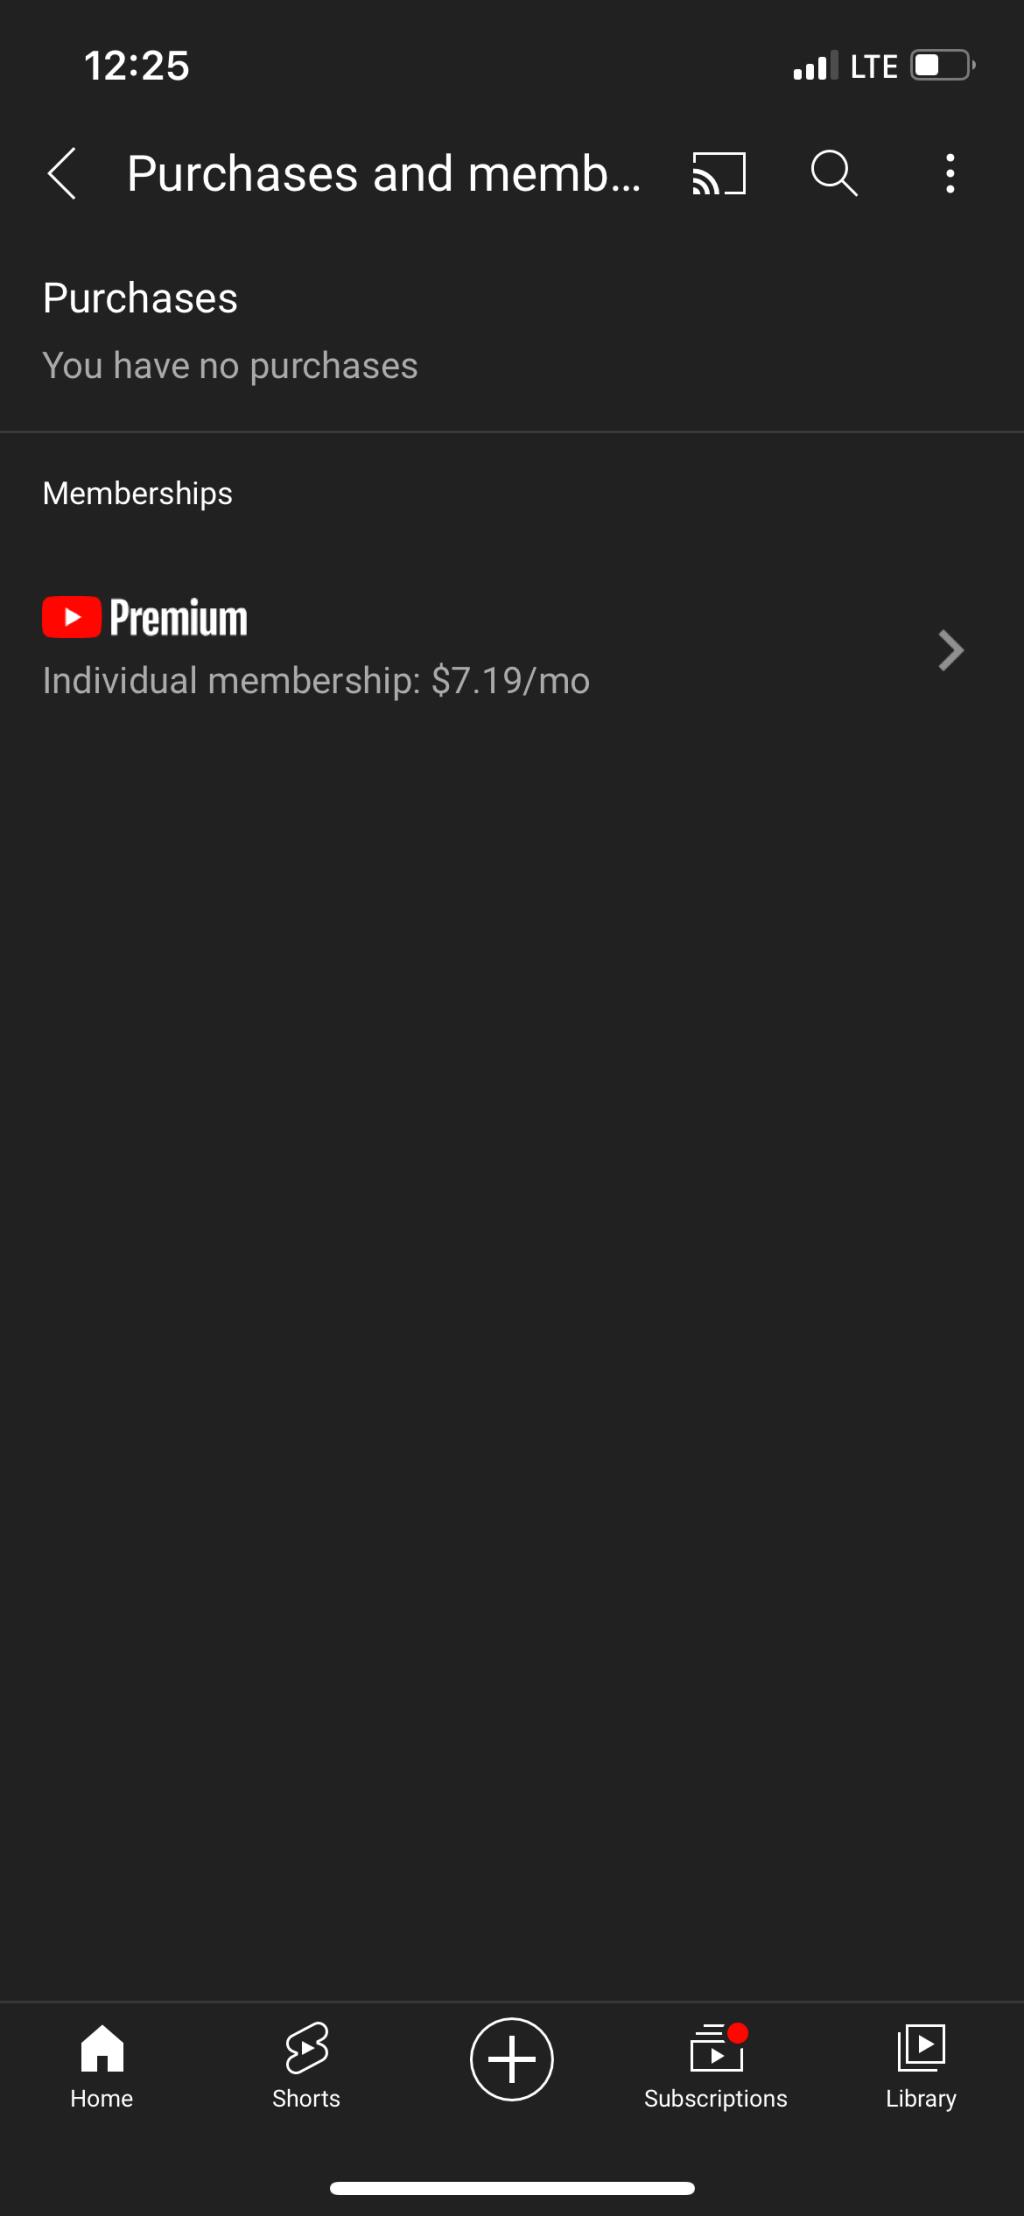 YouTube Premium을 취소하는 방법